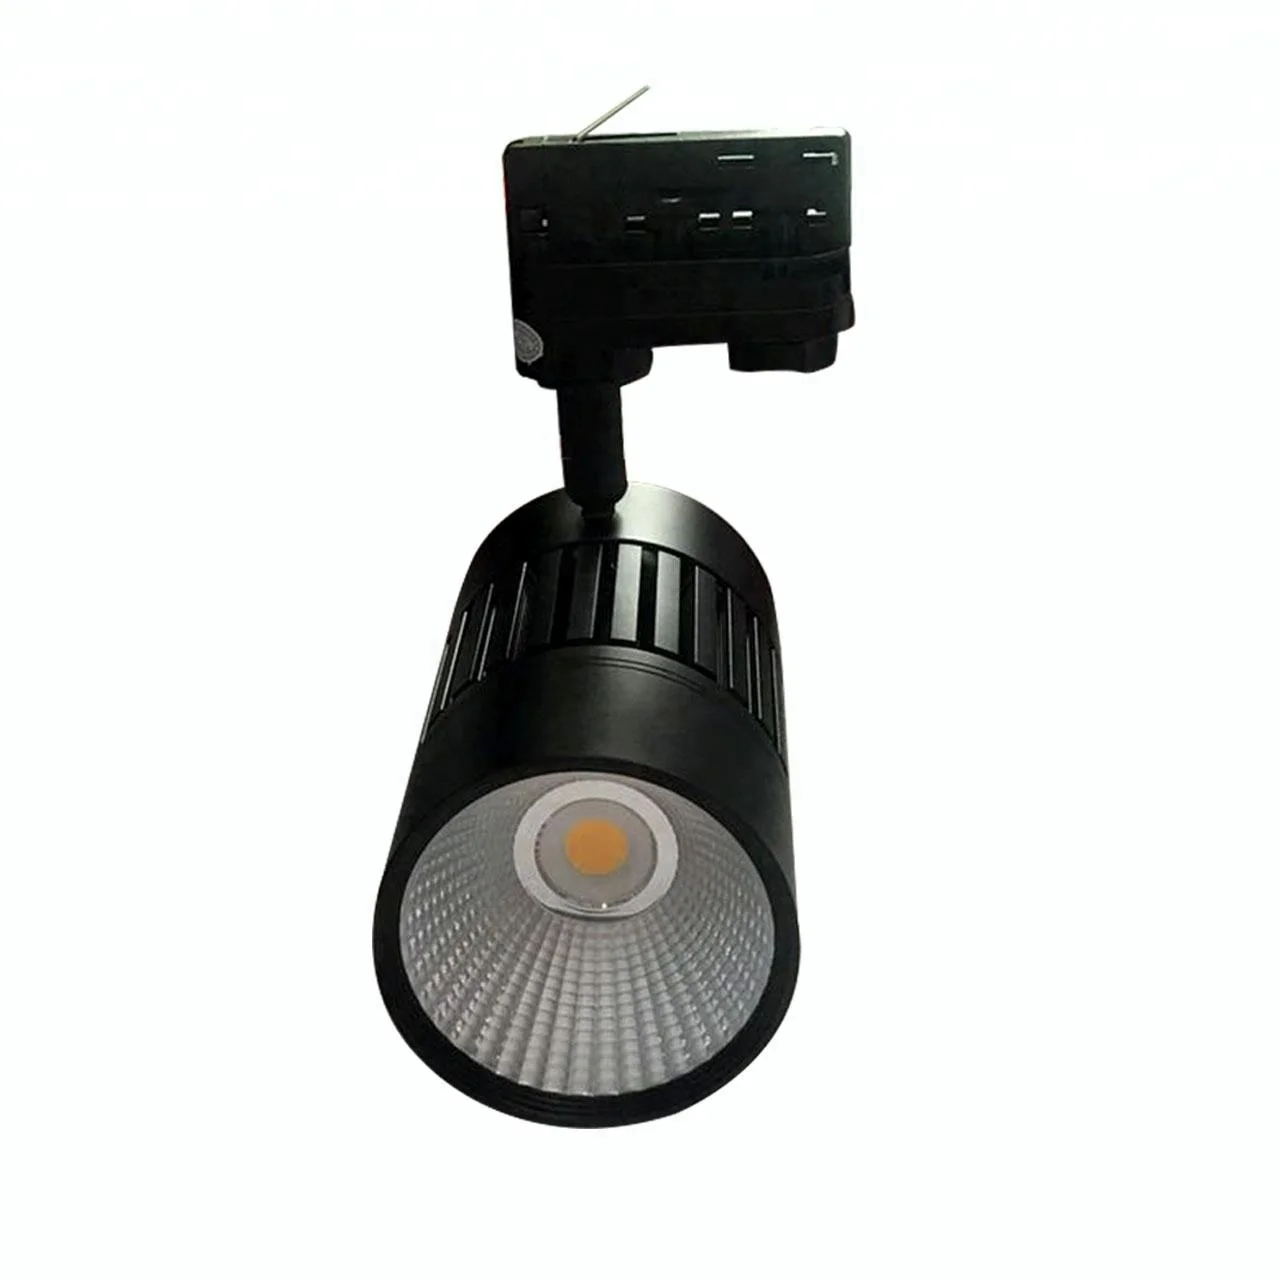 Shenzhen factory high quality 8w mini led cob track light spotlight for commercial lighting